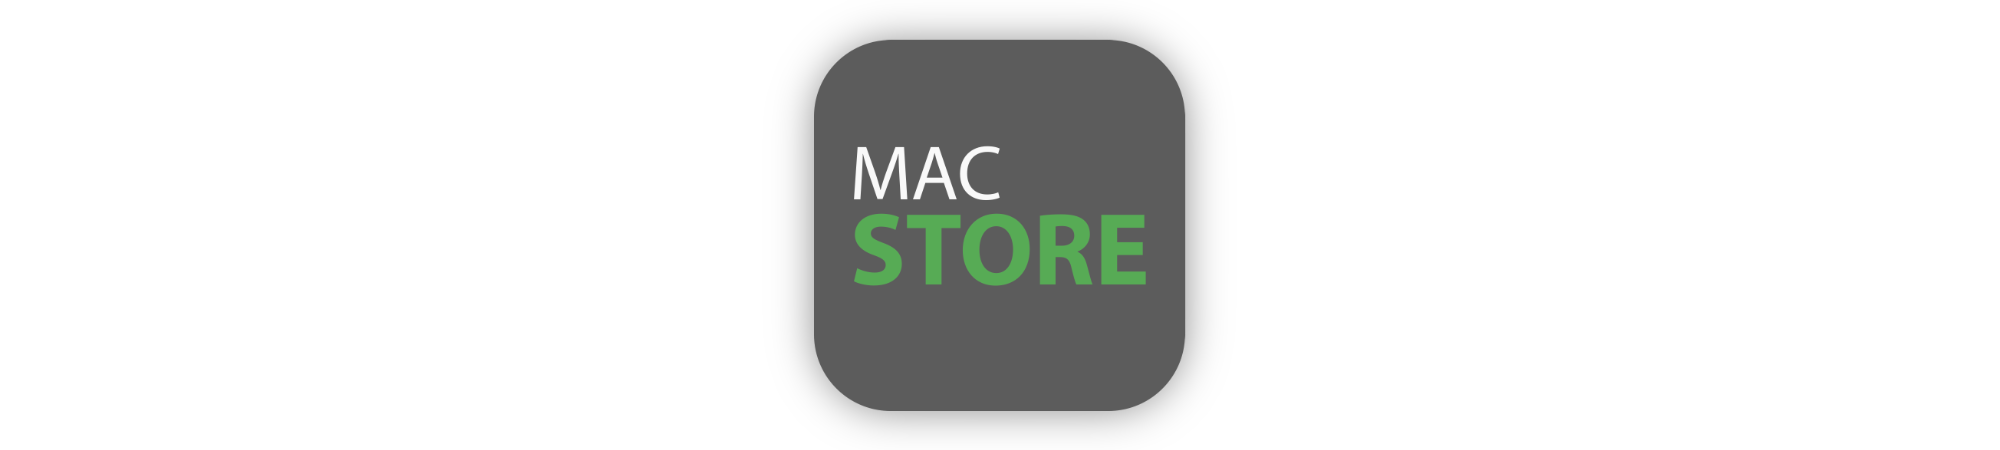 Onde estamos Lacs Cascais_iphone_macbook_usados_Mac Store